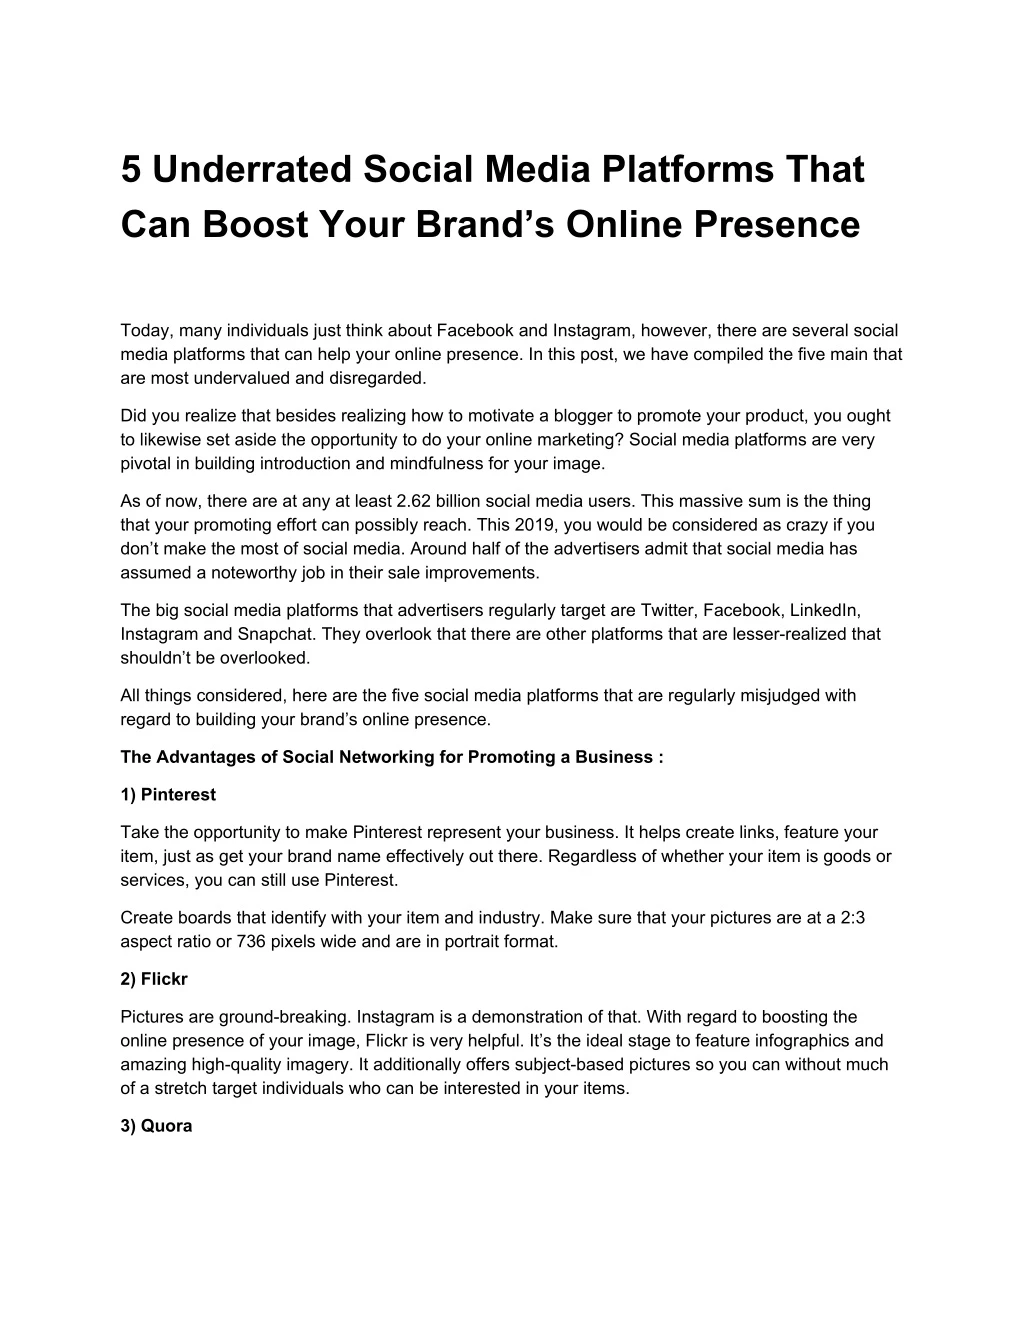 5 underrated social media platforms that